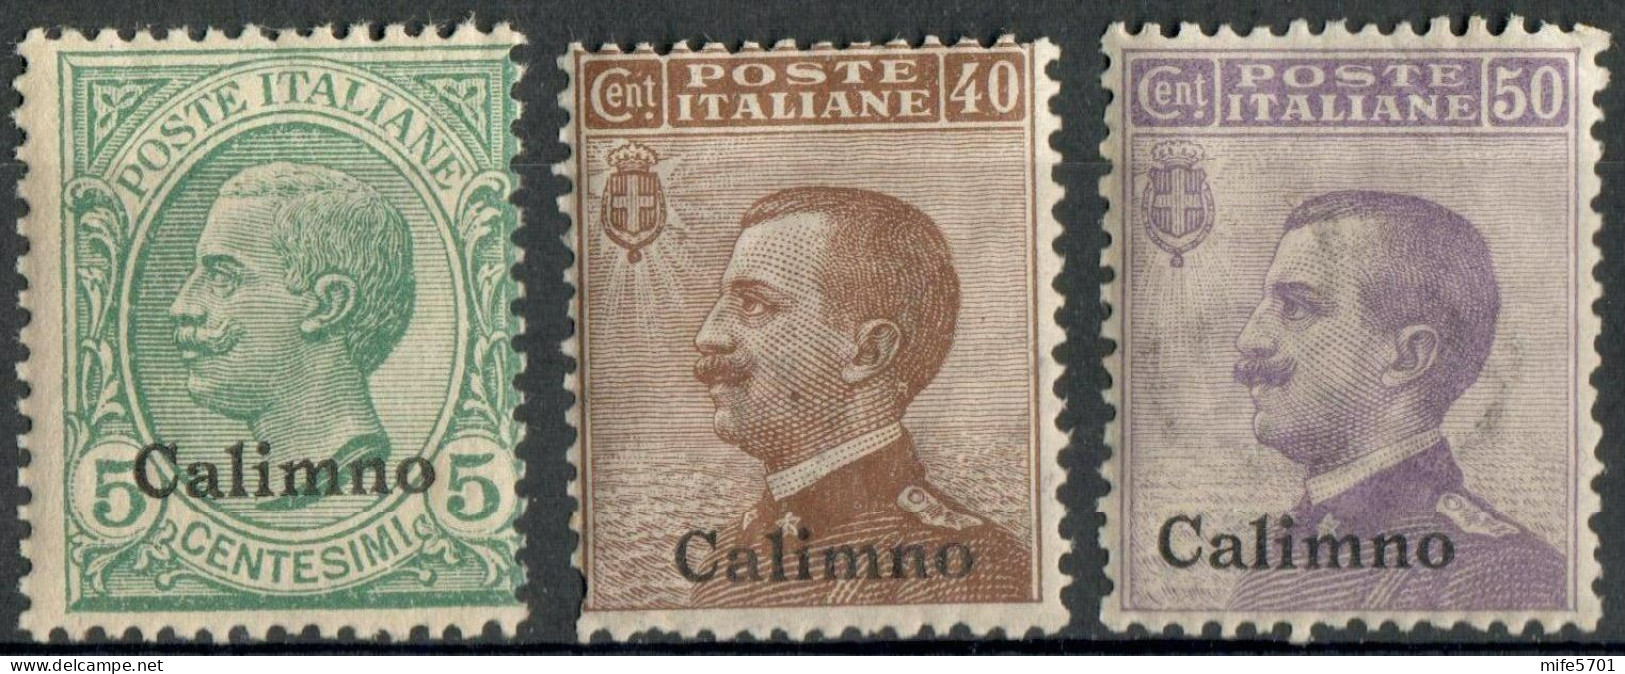 REGNO COLONIE EGEO CALINO 1916 TRE FRANCOBOLLI C. 5 / C. 40 / C. 50 SOPRASTAMPATI 'CALIMNO' NUOVI MNH ** SASSONE 2-6/7 - Egée (Calino)